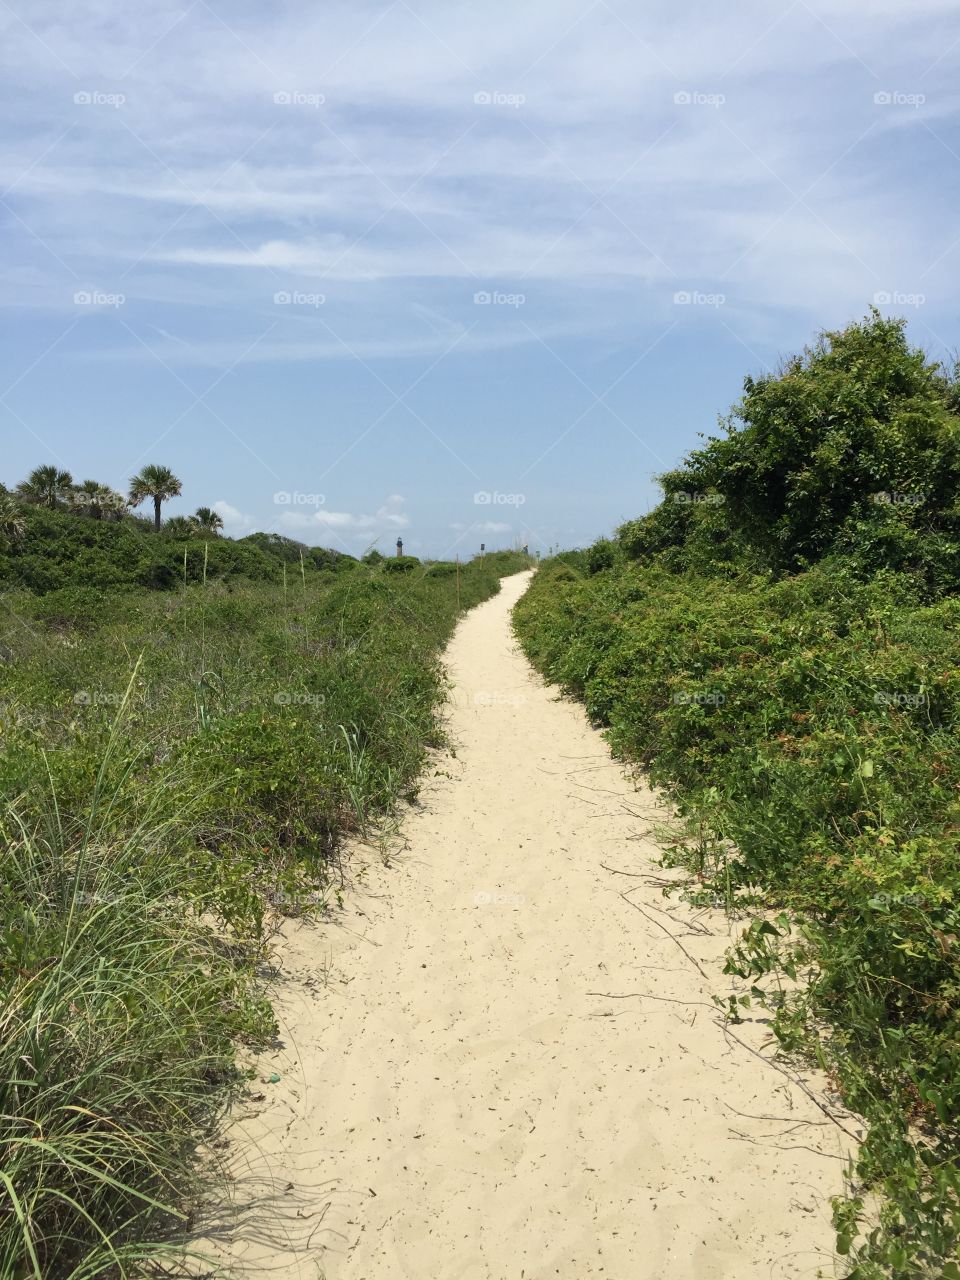 Sand path 